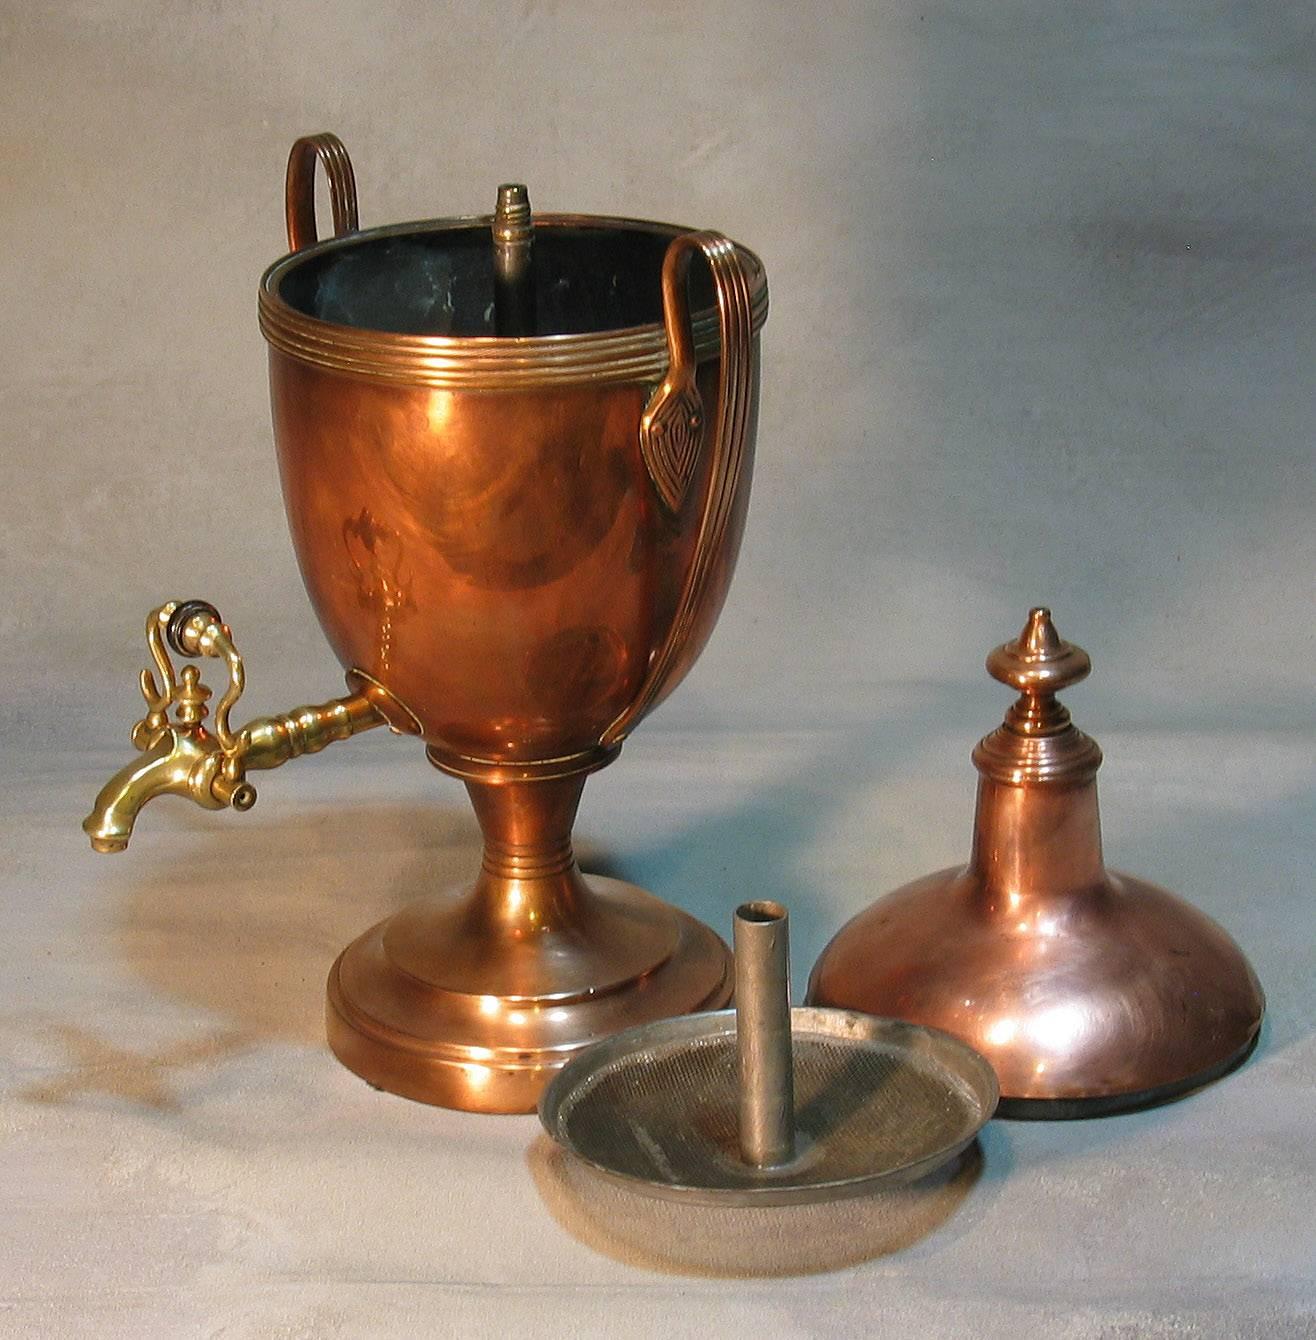 Victorian Copper Hot Water Urn, Paris Exhibition 1855 Medal Winner Design 4